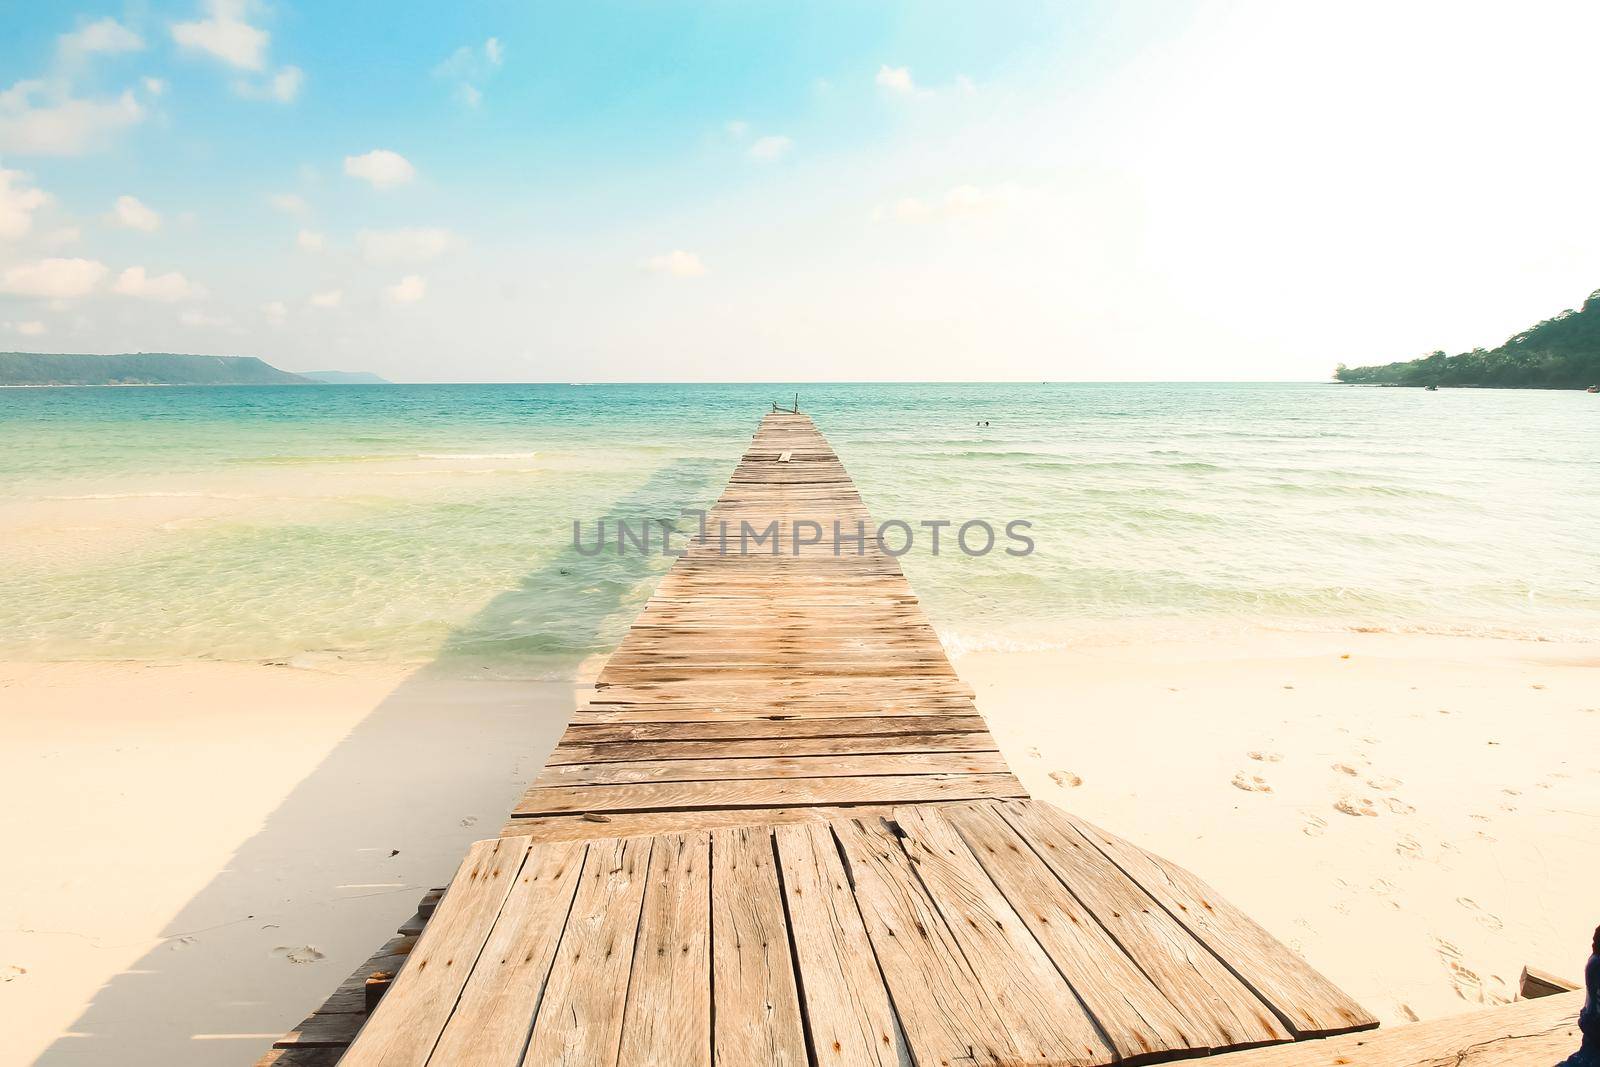 Wooden boardwalk leading to the white sandy beach of Koh Rong Samloen Island, a popular summer getaway destination in Cambodia